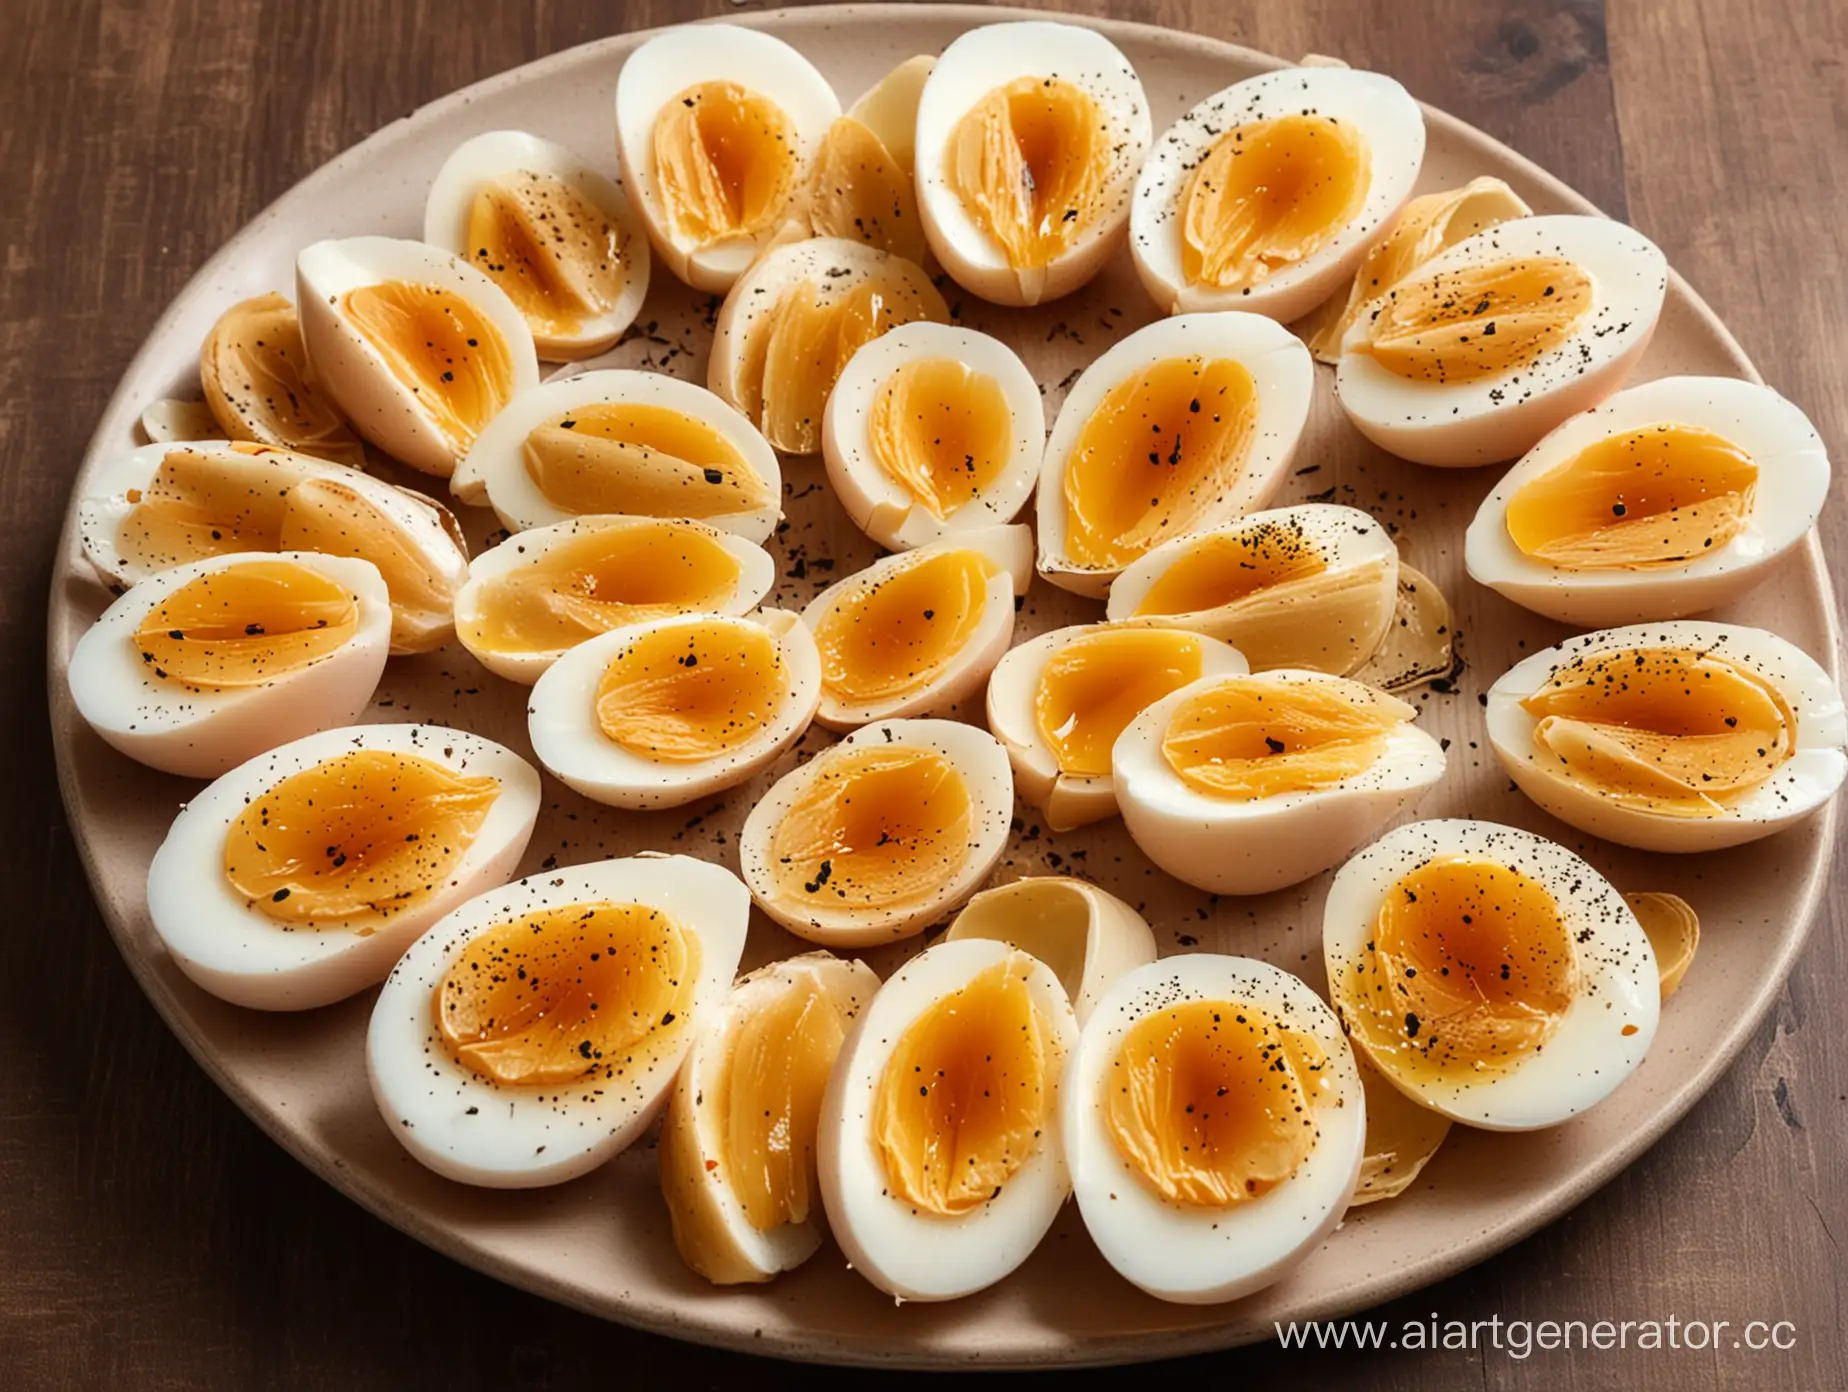 Sliced-Smoked-Eggs-Arranged-Artfully-on-a-Platter